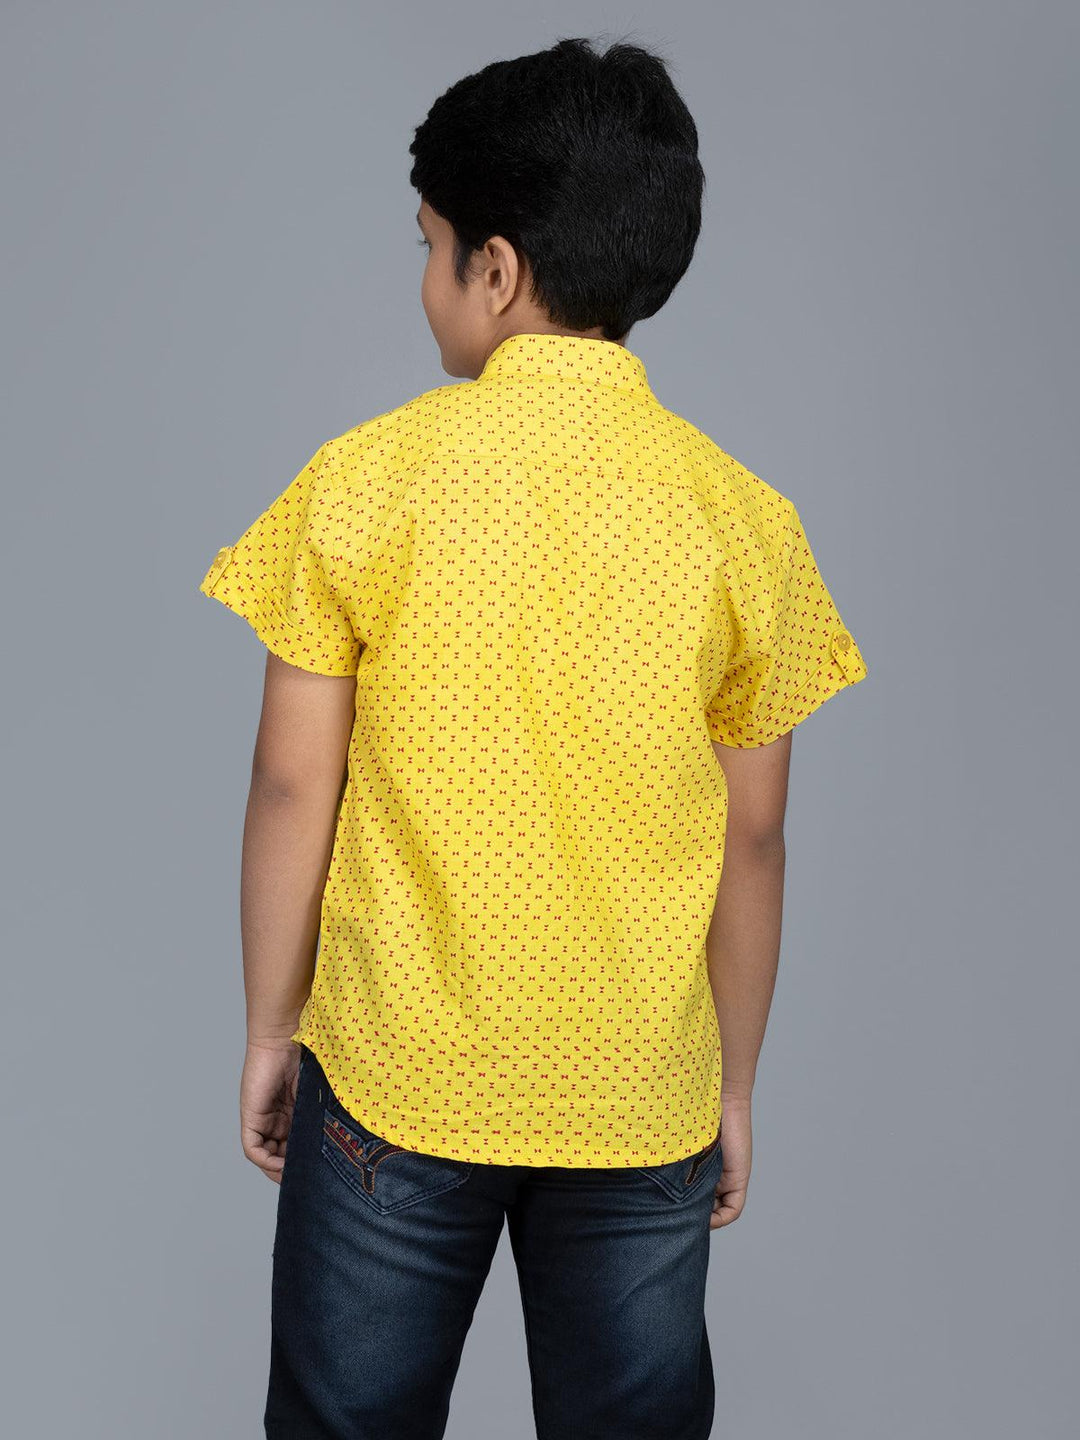 Handwoven Cotton Yellow Printed Boys Shirt - WeaversIndia